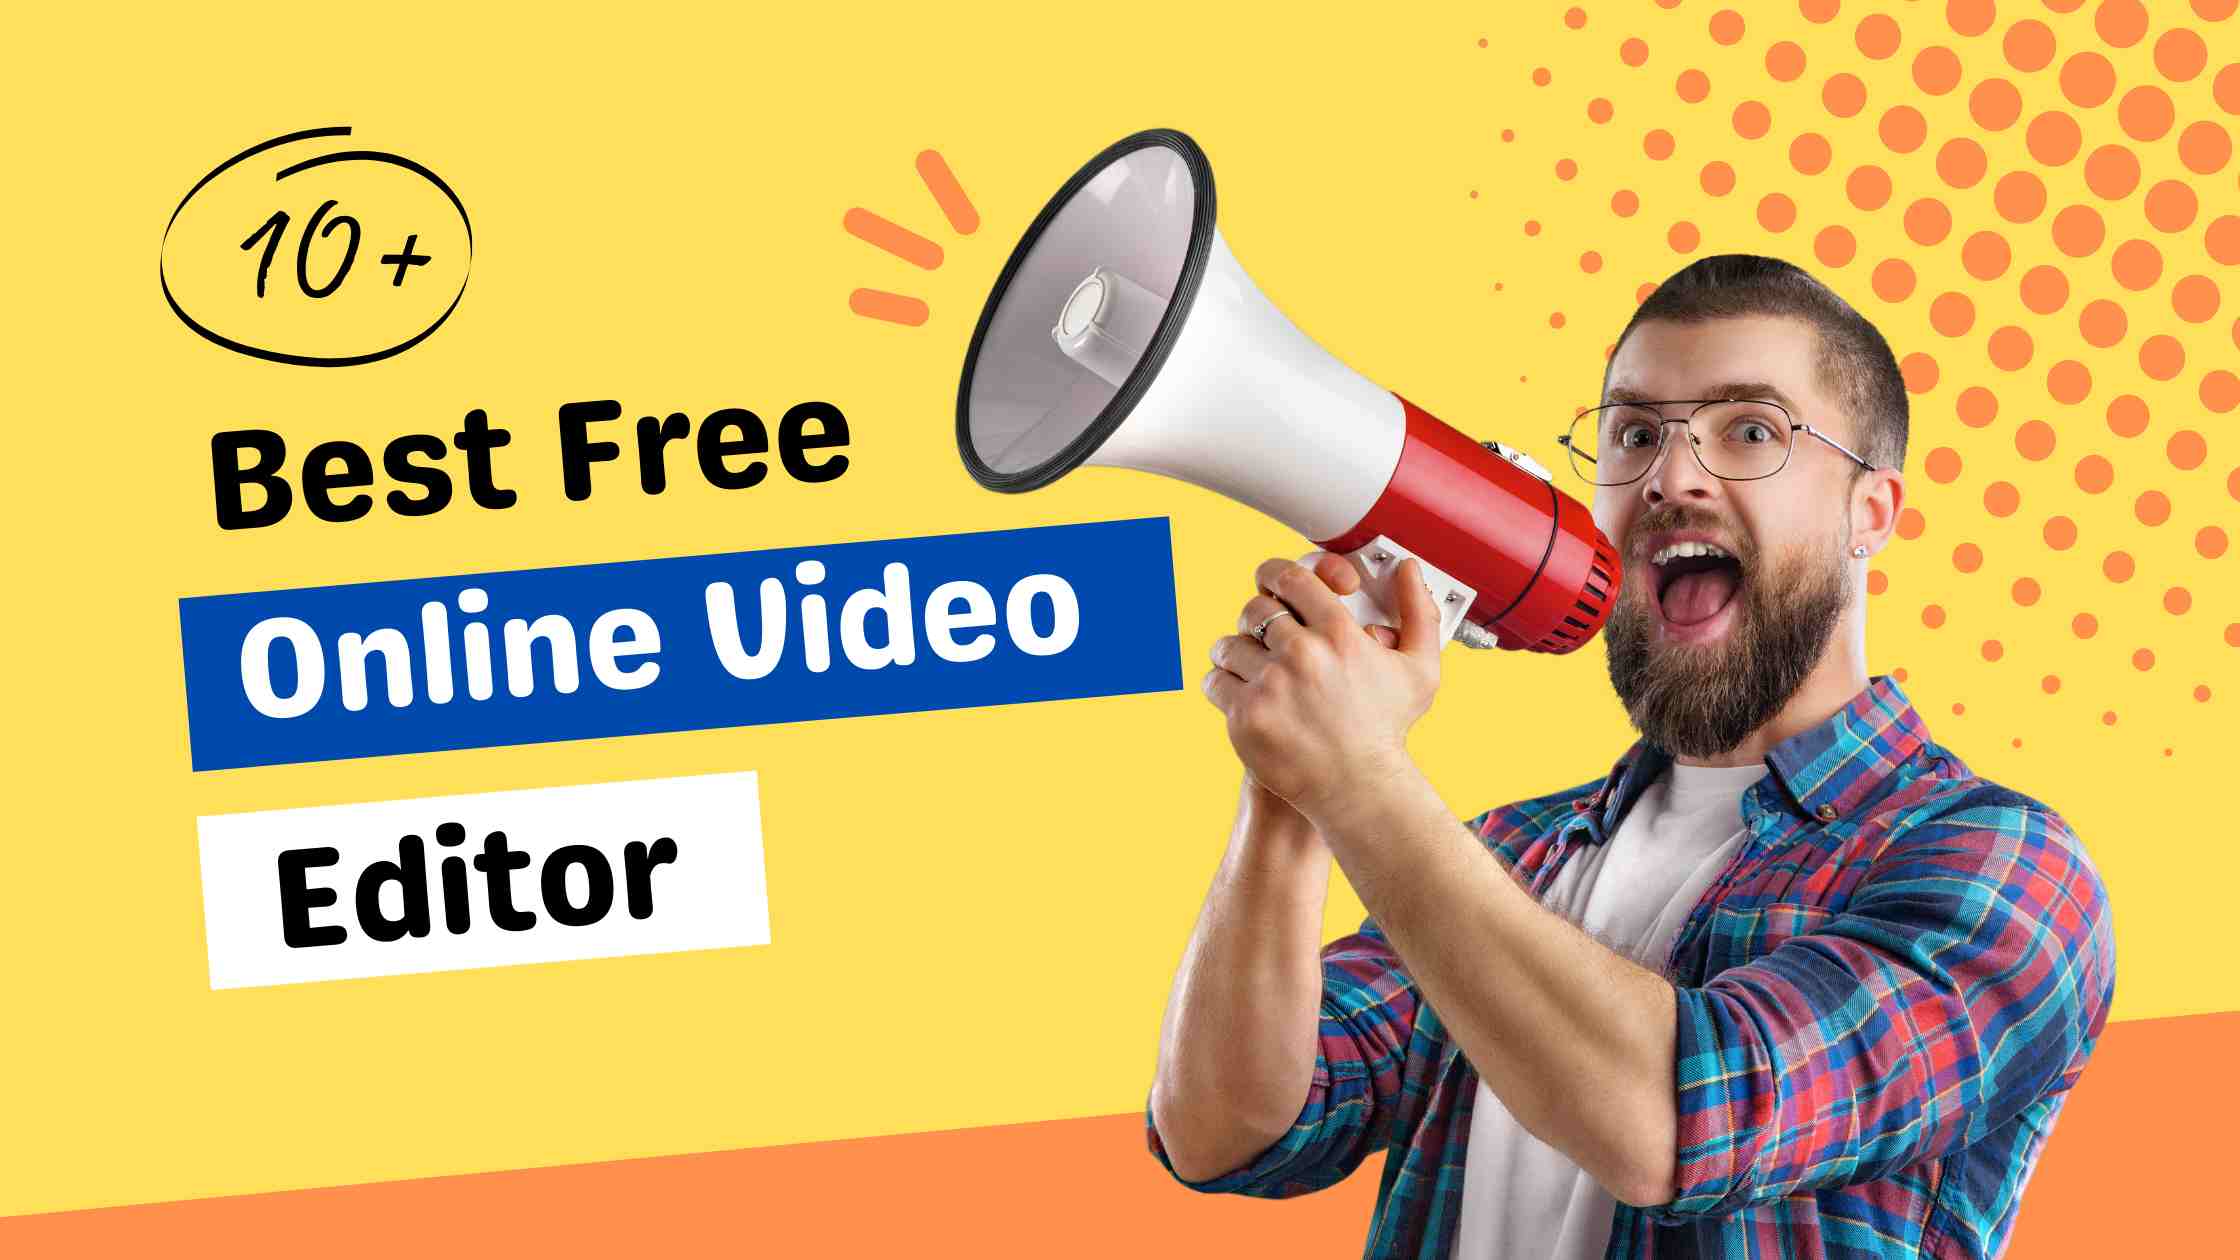 Best Free Online Video Editor